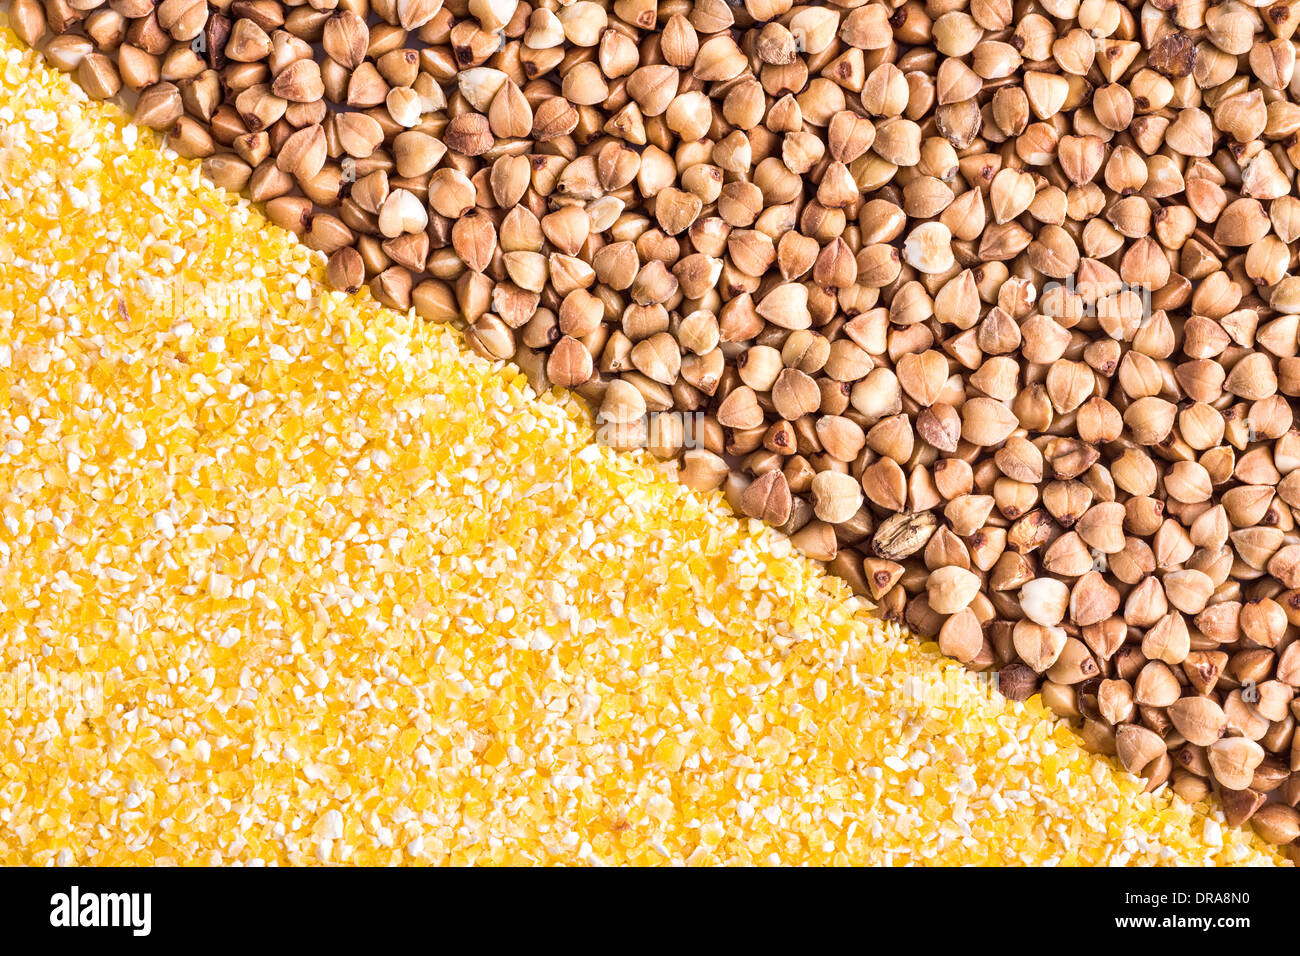 Corn grits and buckwheat background, diagonal split. Stock Photo